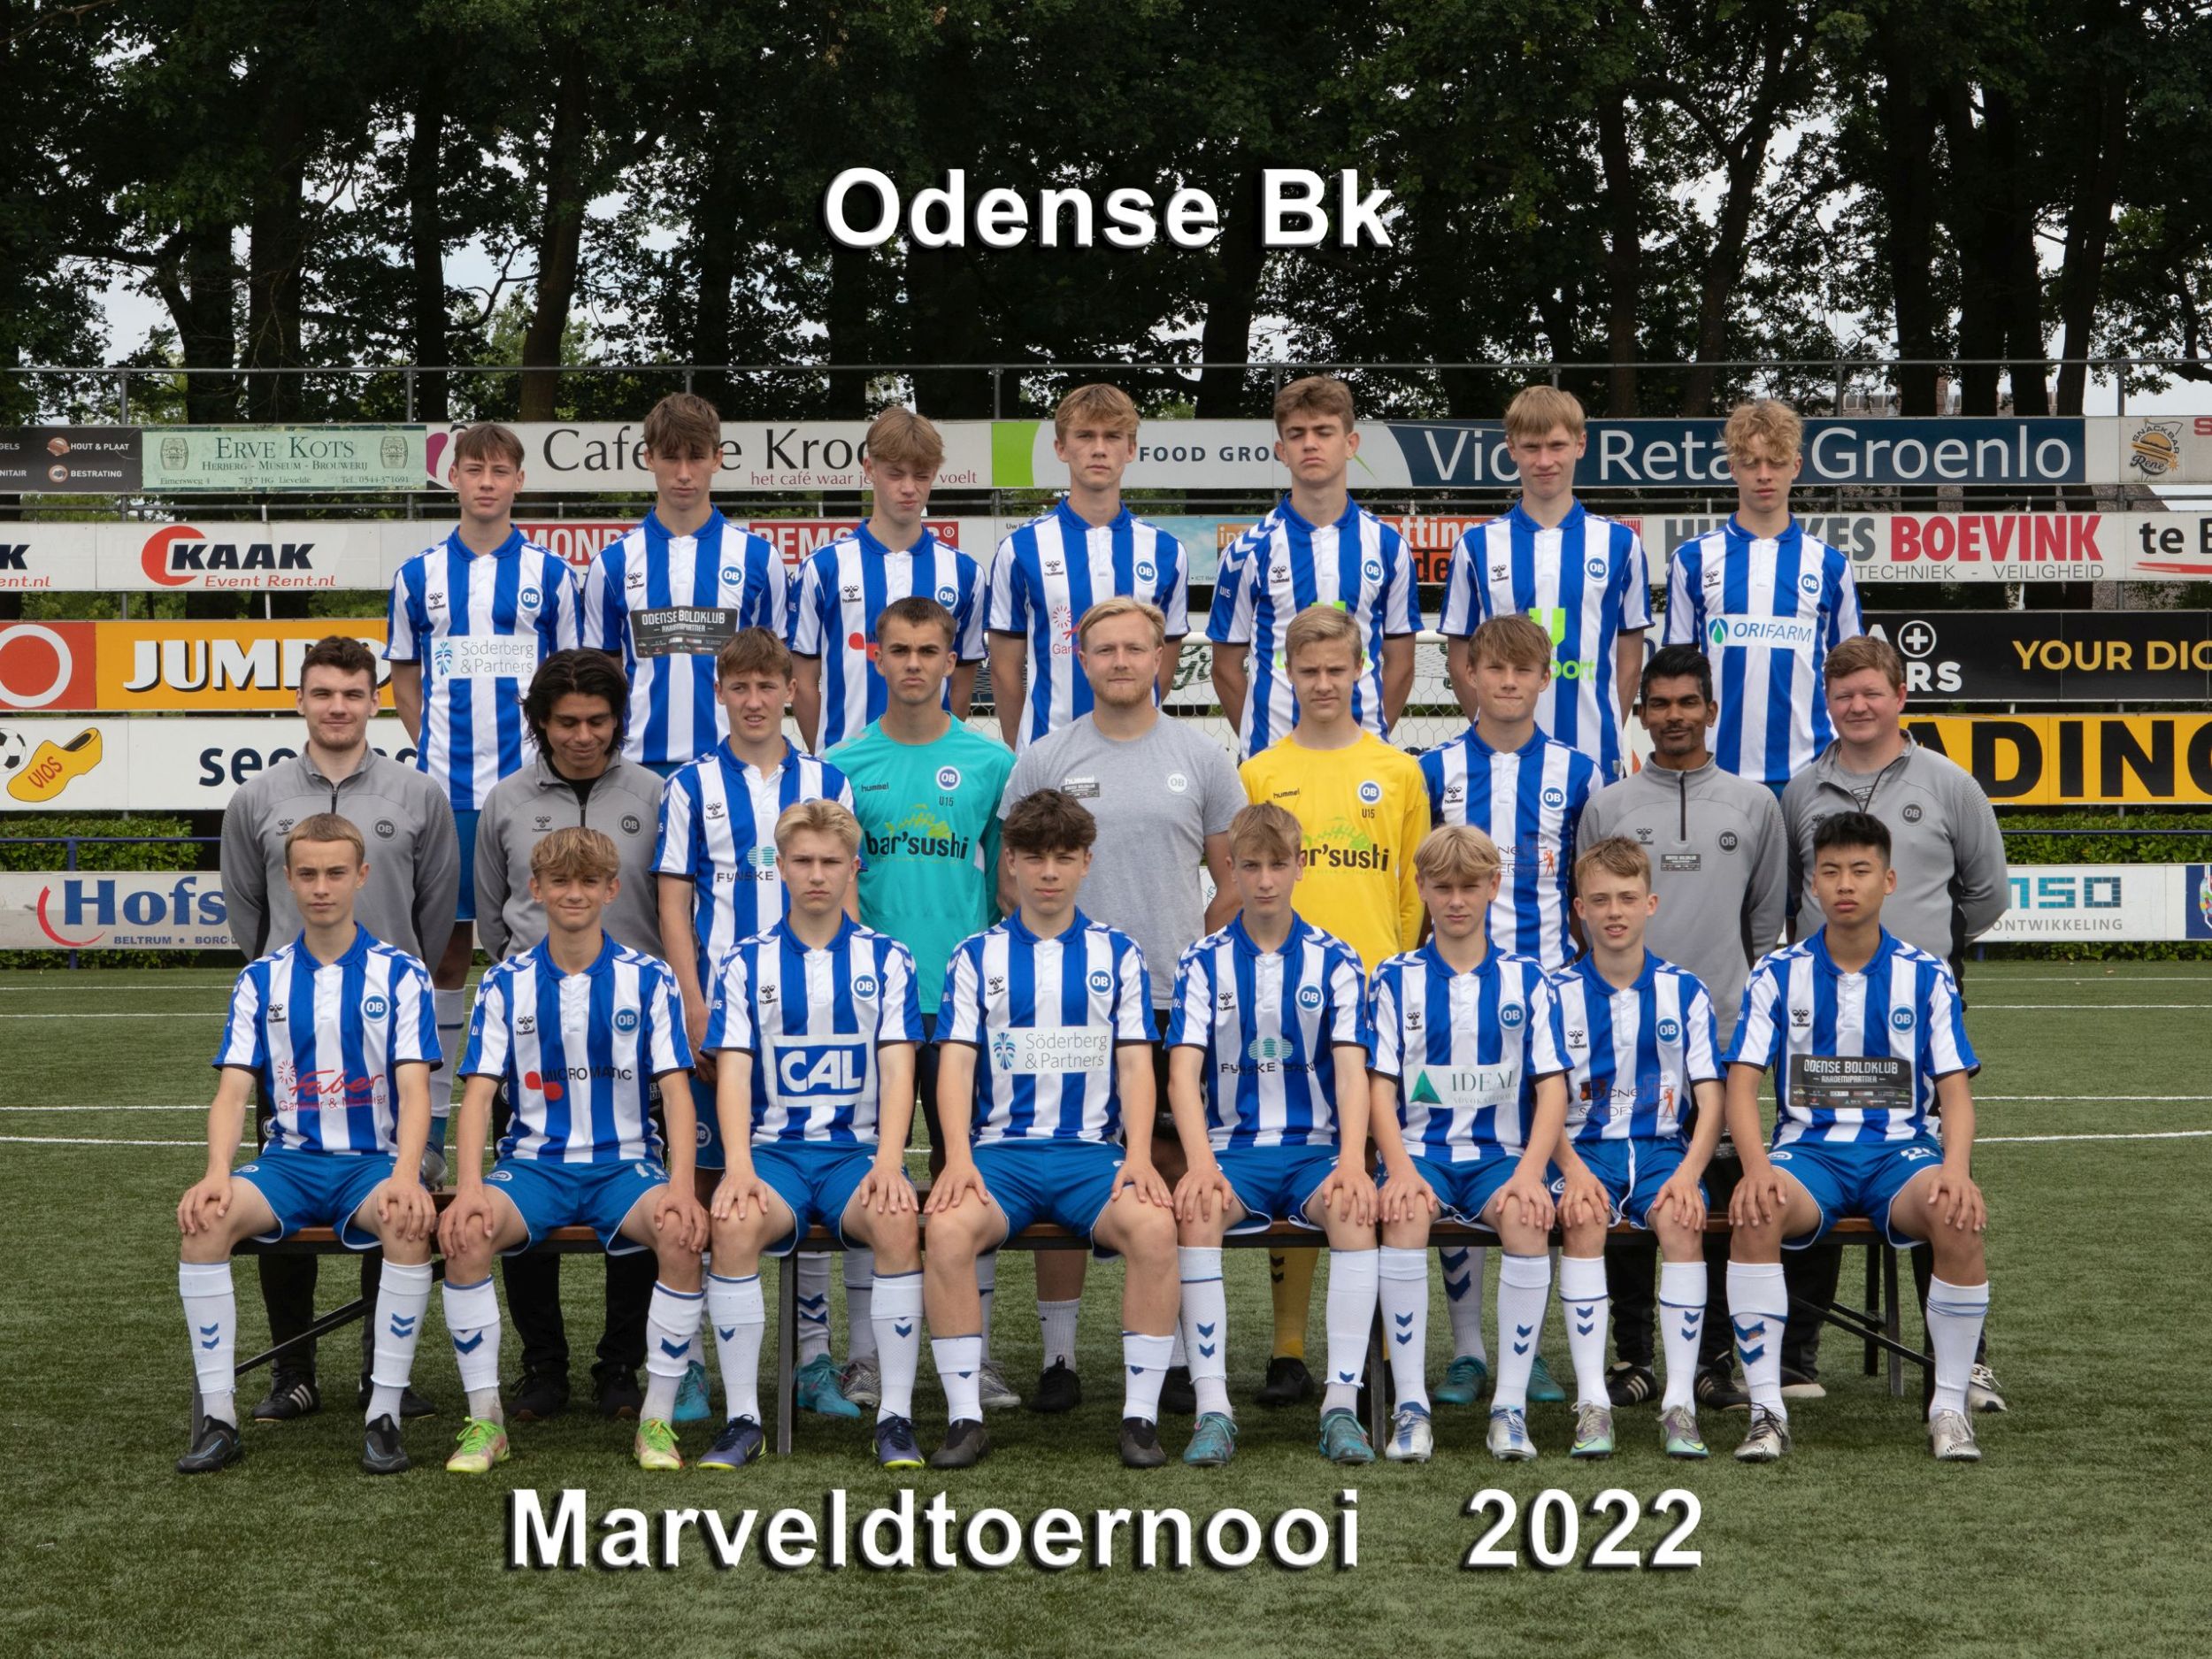 Marveld Tournament 2022 - Team Odense BK